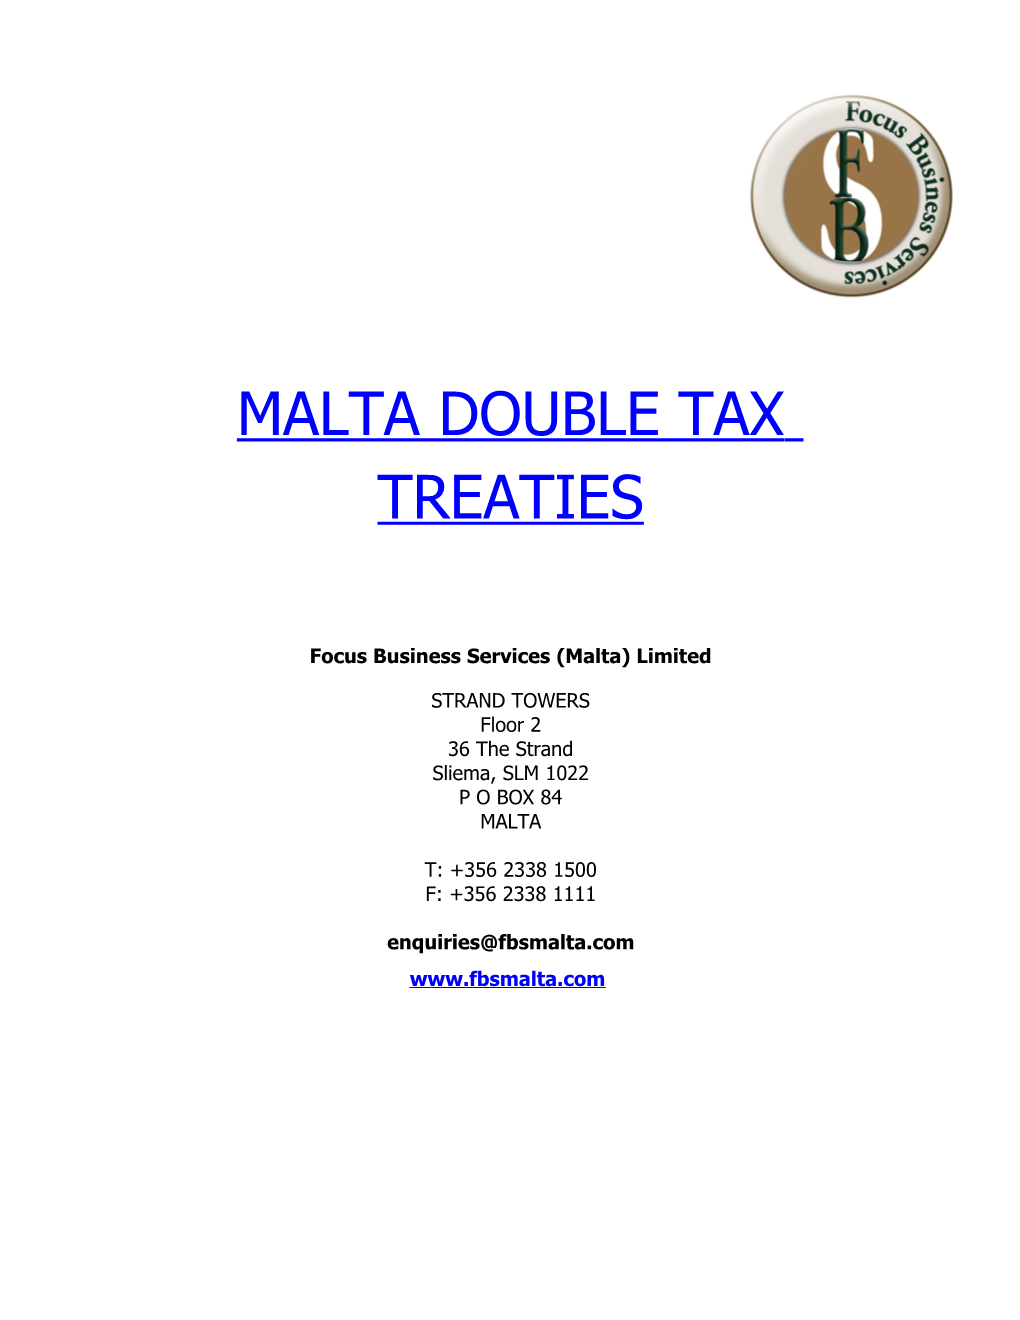 Double Tax Treaty Between Malta and Poland